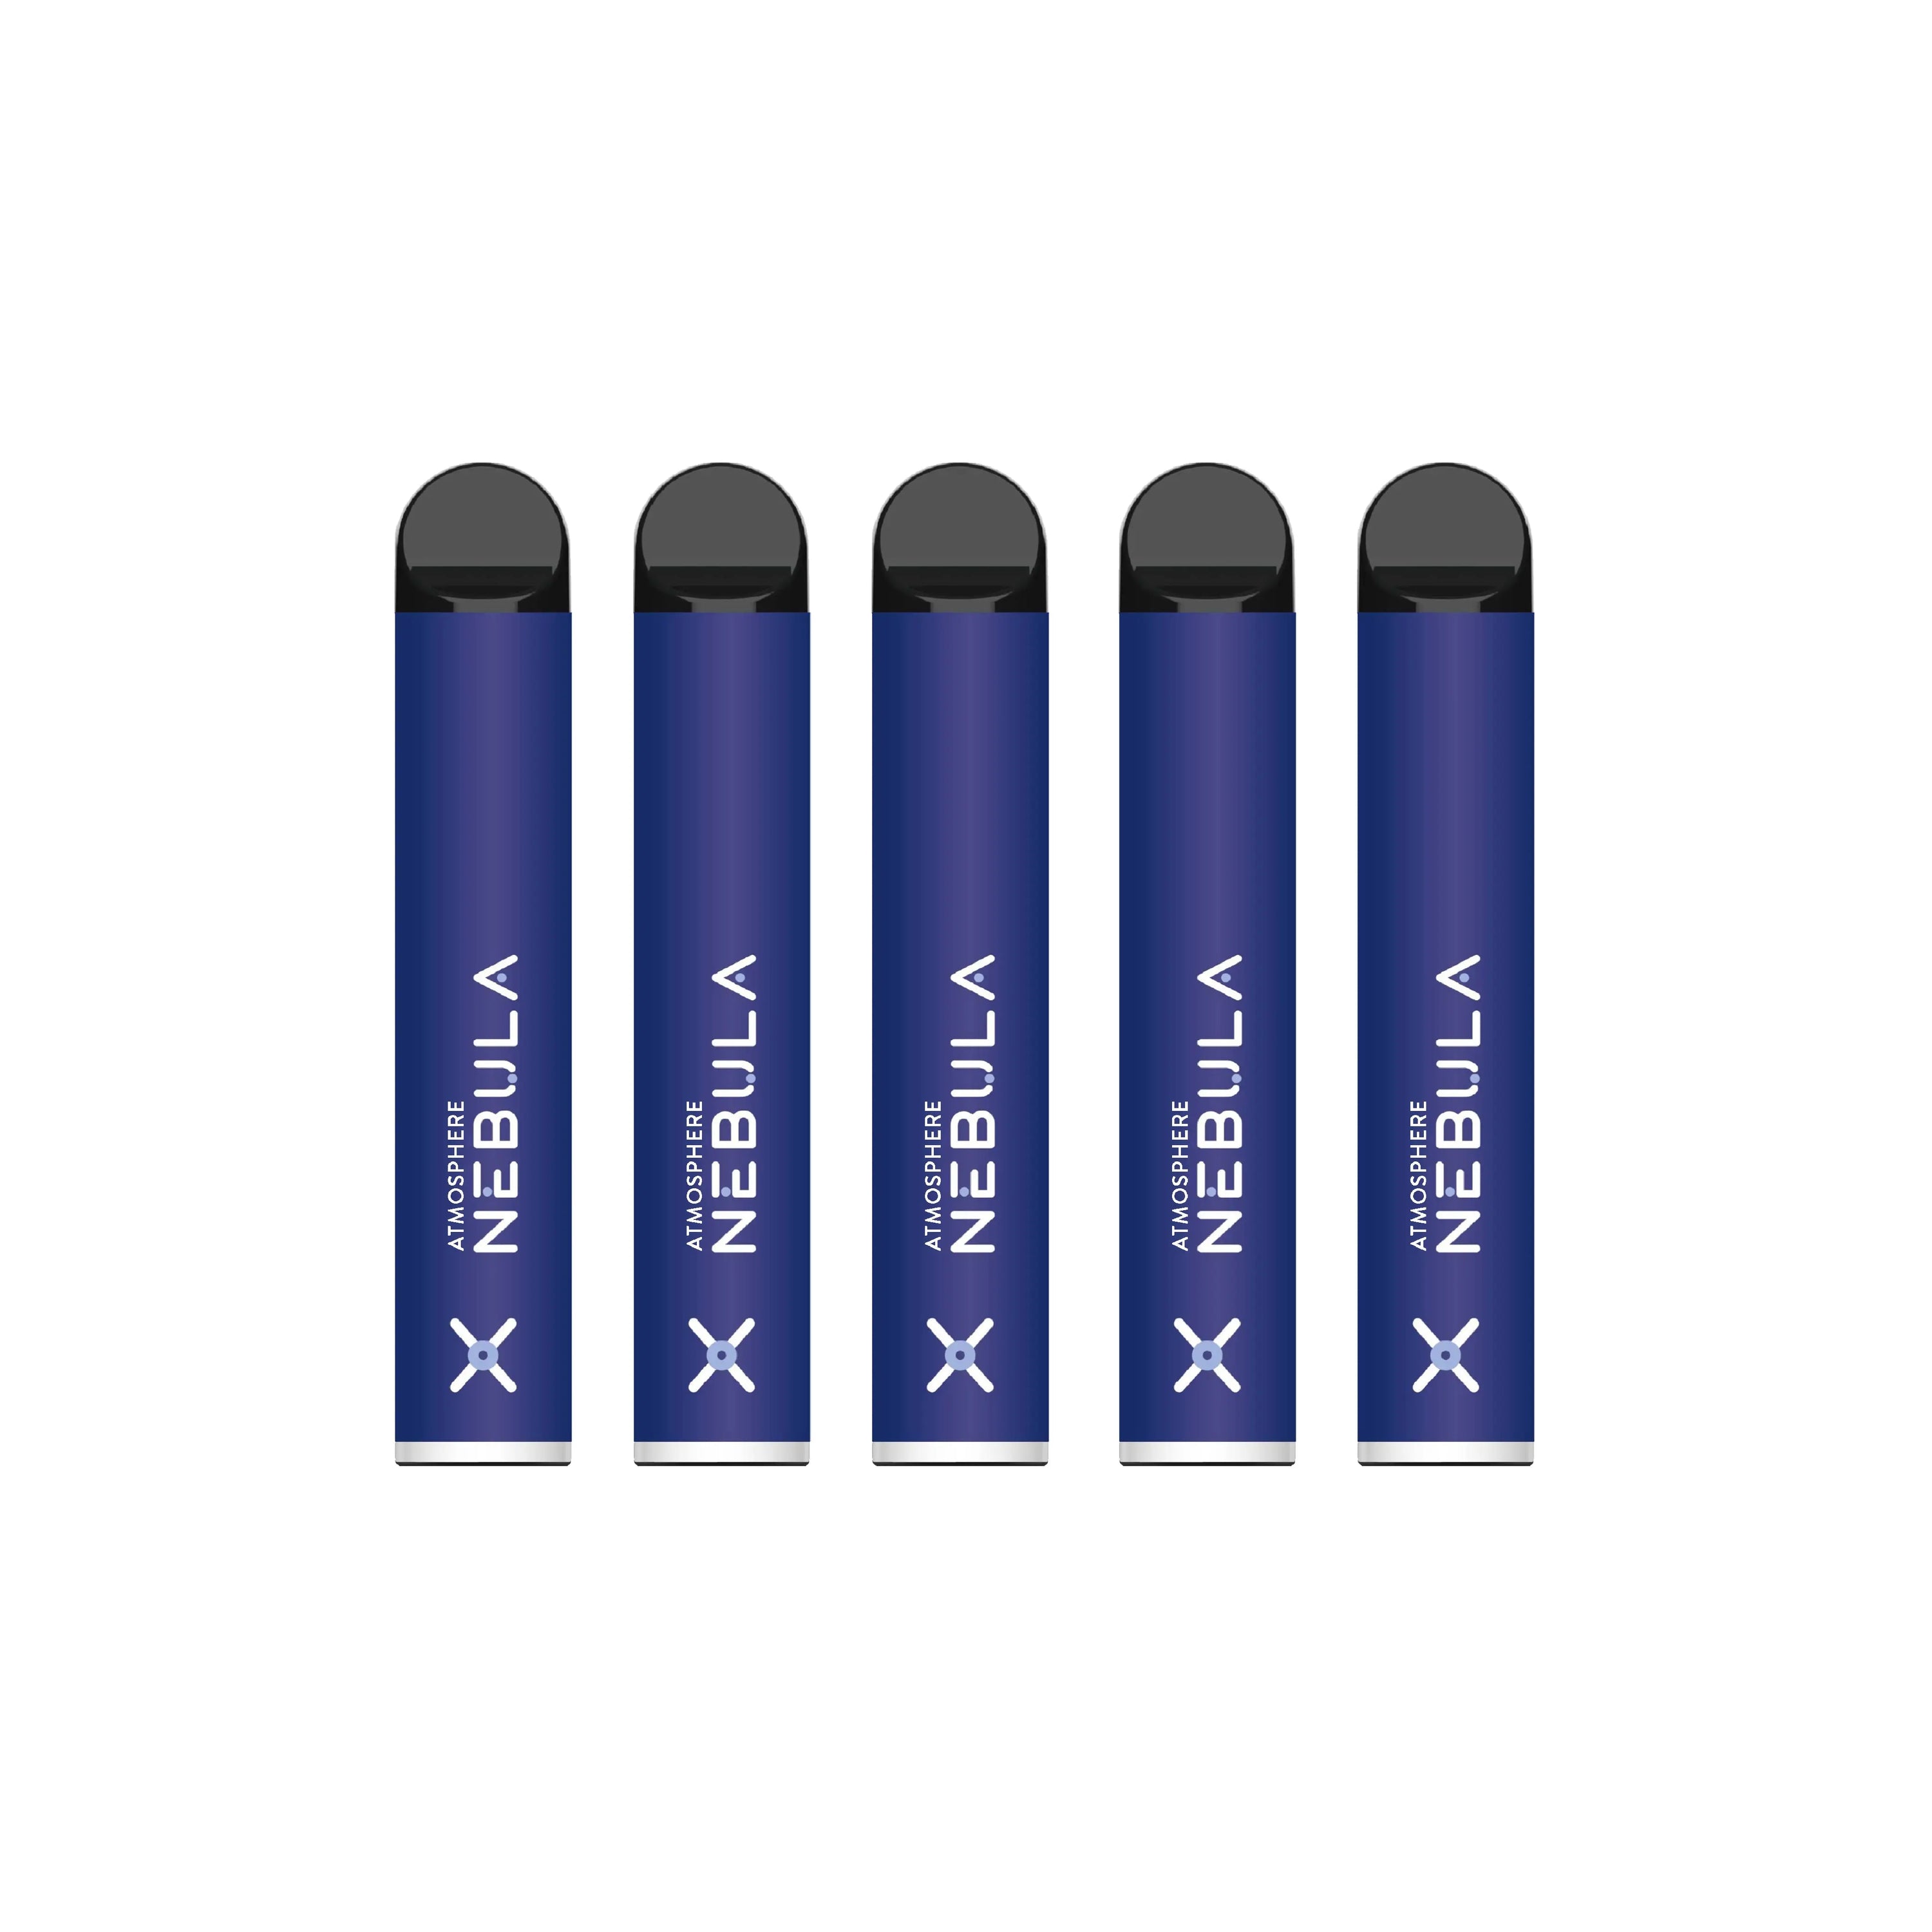 Nebula Atmosphere 0% Nicotine 1800 Puffs Disposable Vape Online - Blueberry Mint Nebula